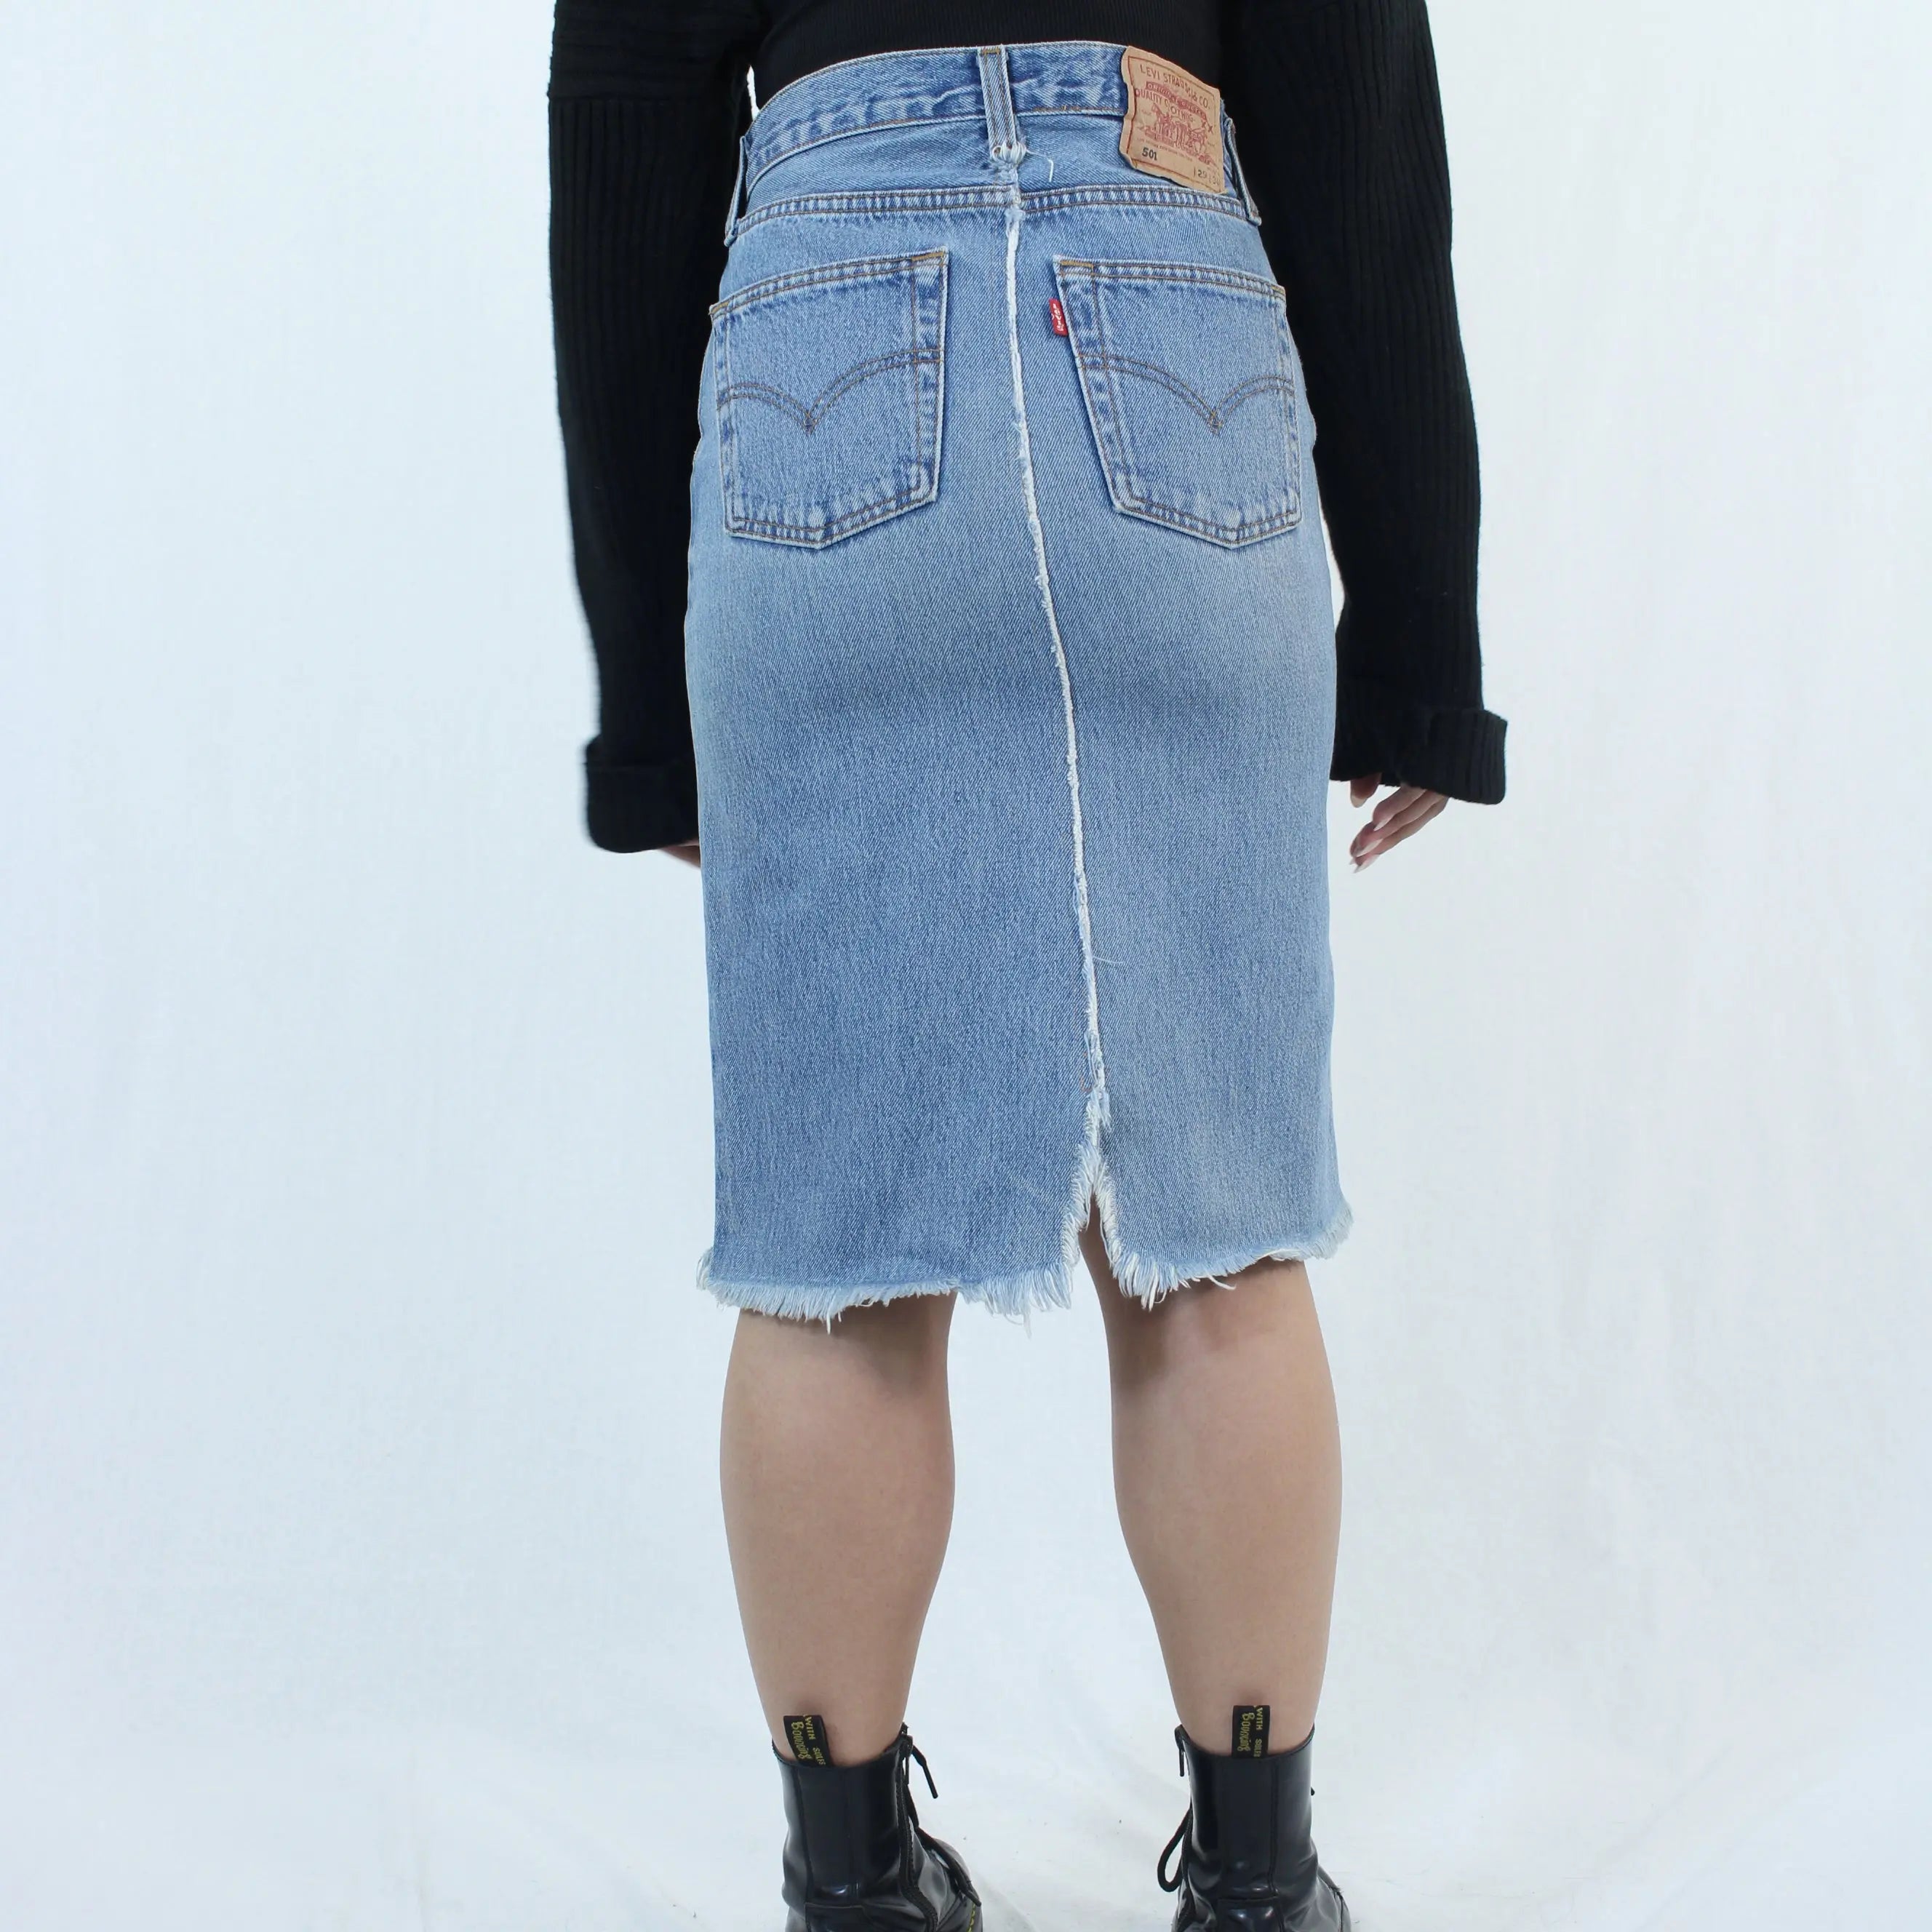 Levi's - Levi's Denim Skirts- ThriftTale.com - Vintage and second handclothing